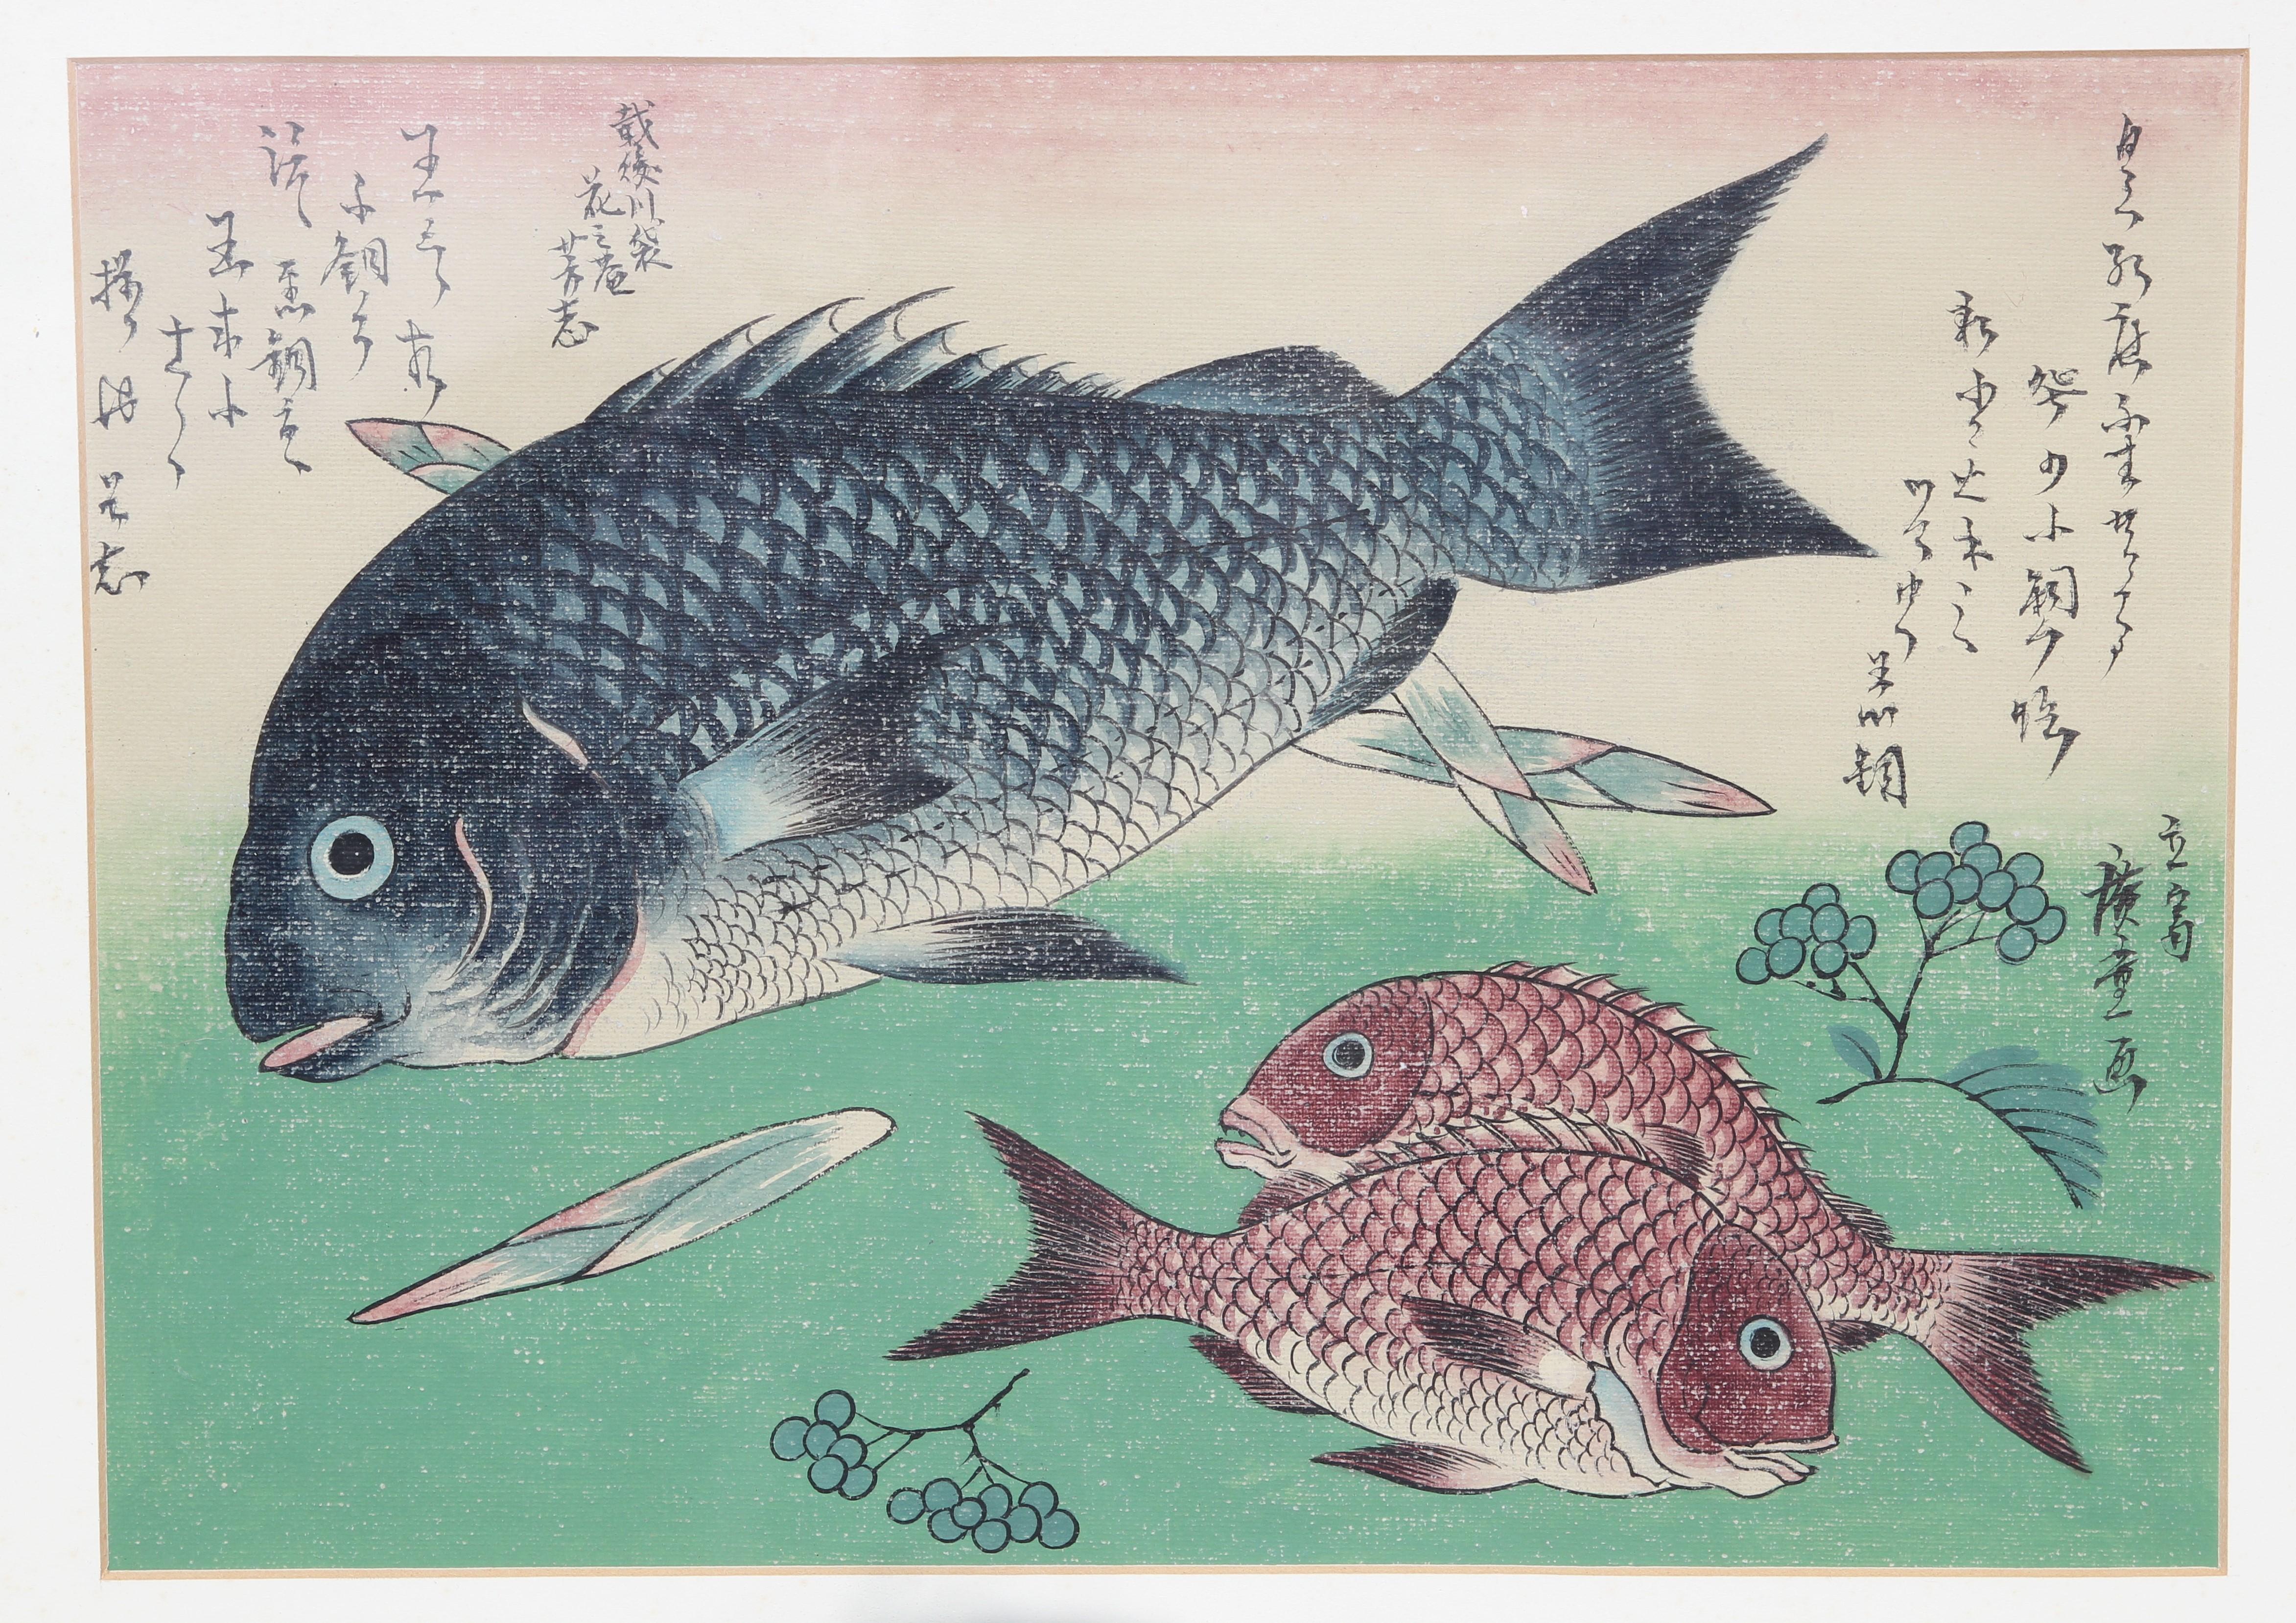 Kurodai & Kodai Fish with Bamboo Shoots and Berries, from the series Uozukushi - Print by Utagawa Hiroshige (Ando Hiroshige)